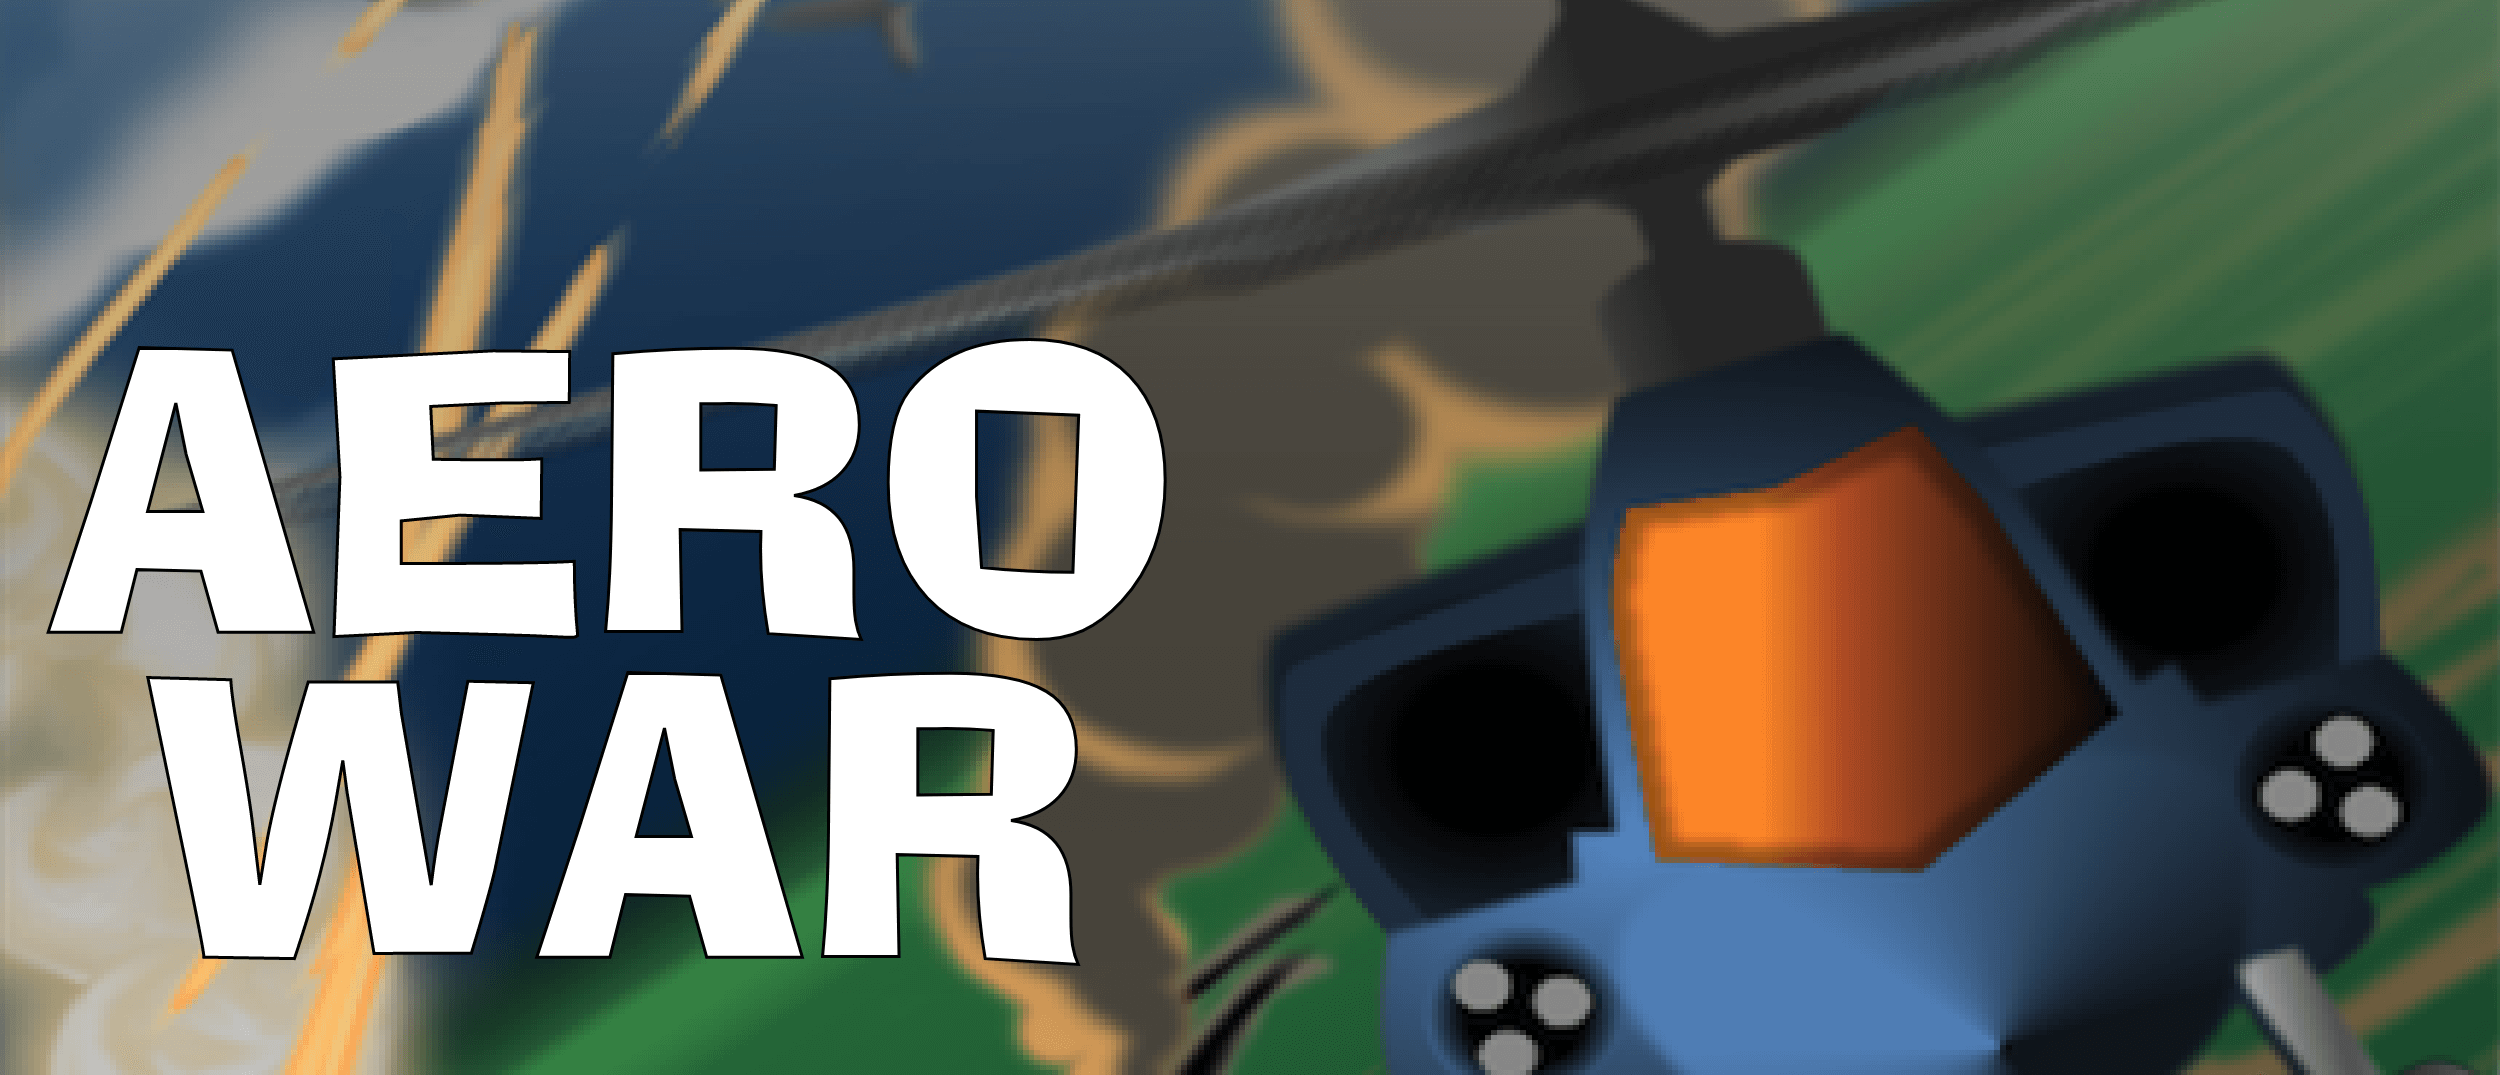 Aero War Files 